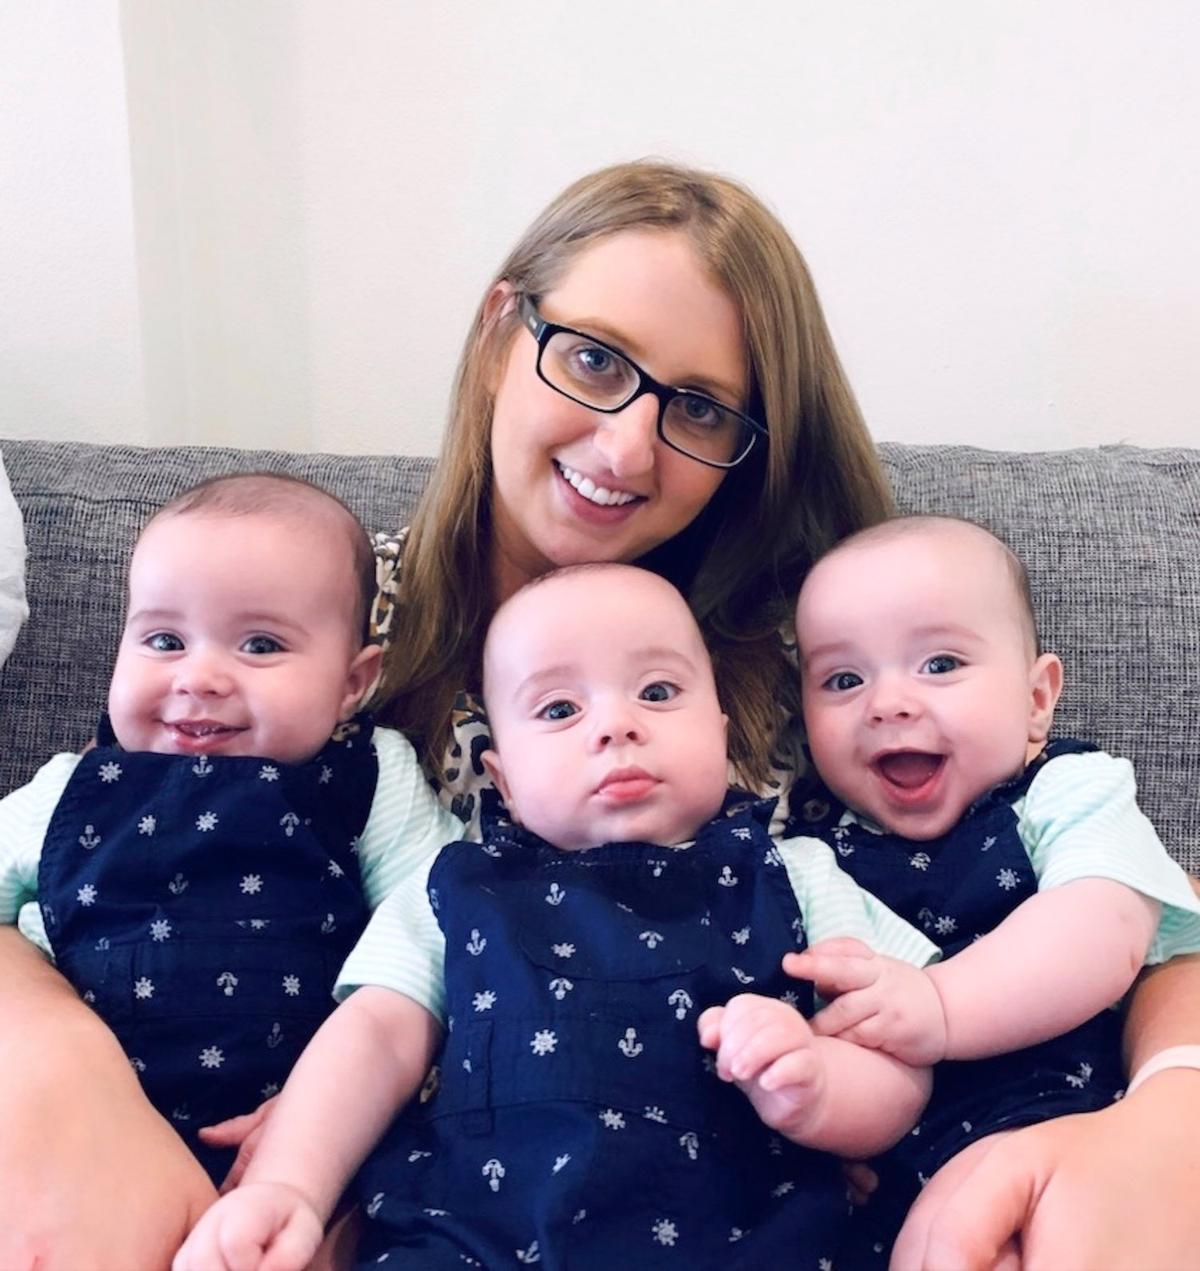 Allana Allard, 29, with her identical triplets, Jaxon, Zac, and Zavier. (Caters News)